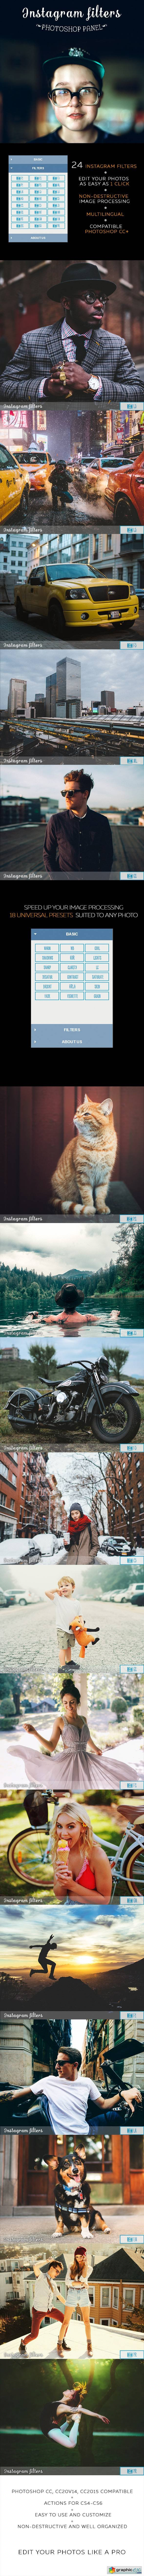 Instagram Filters - Photoshop Panel